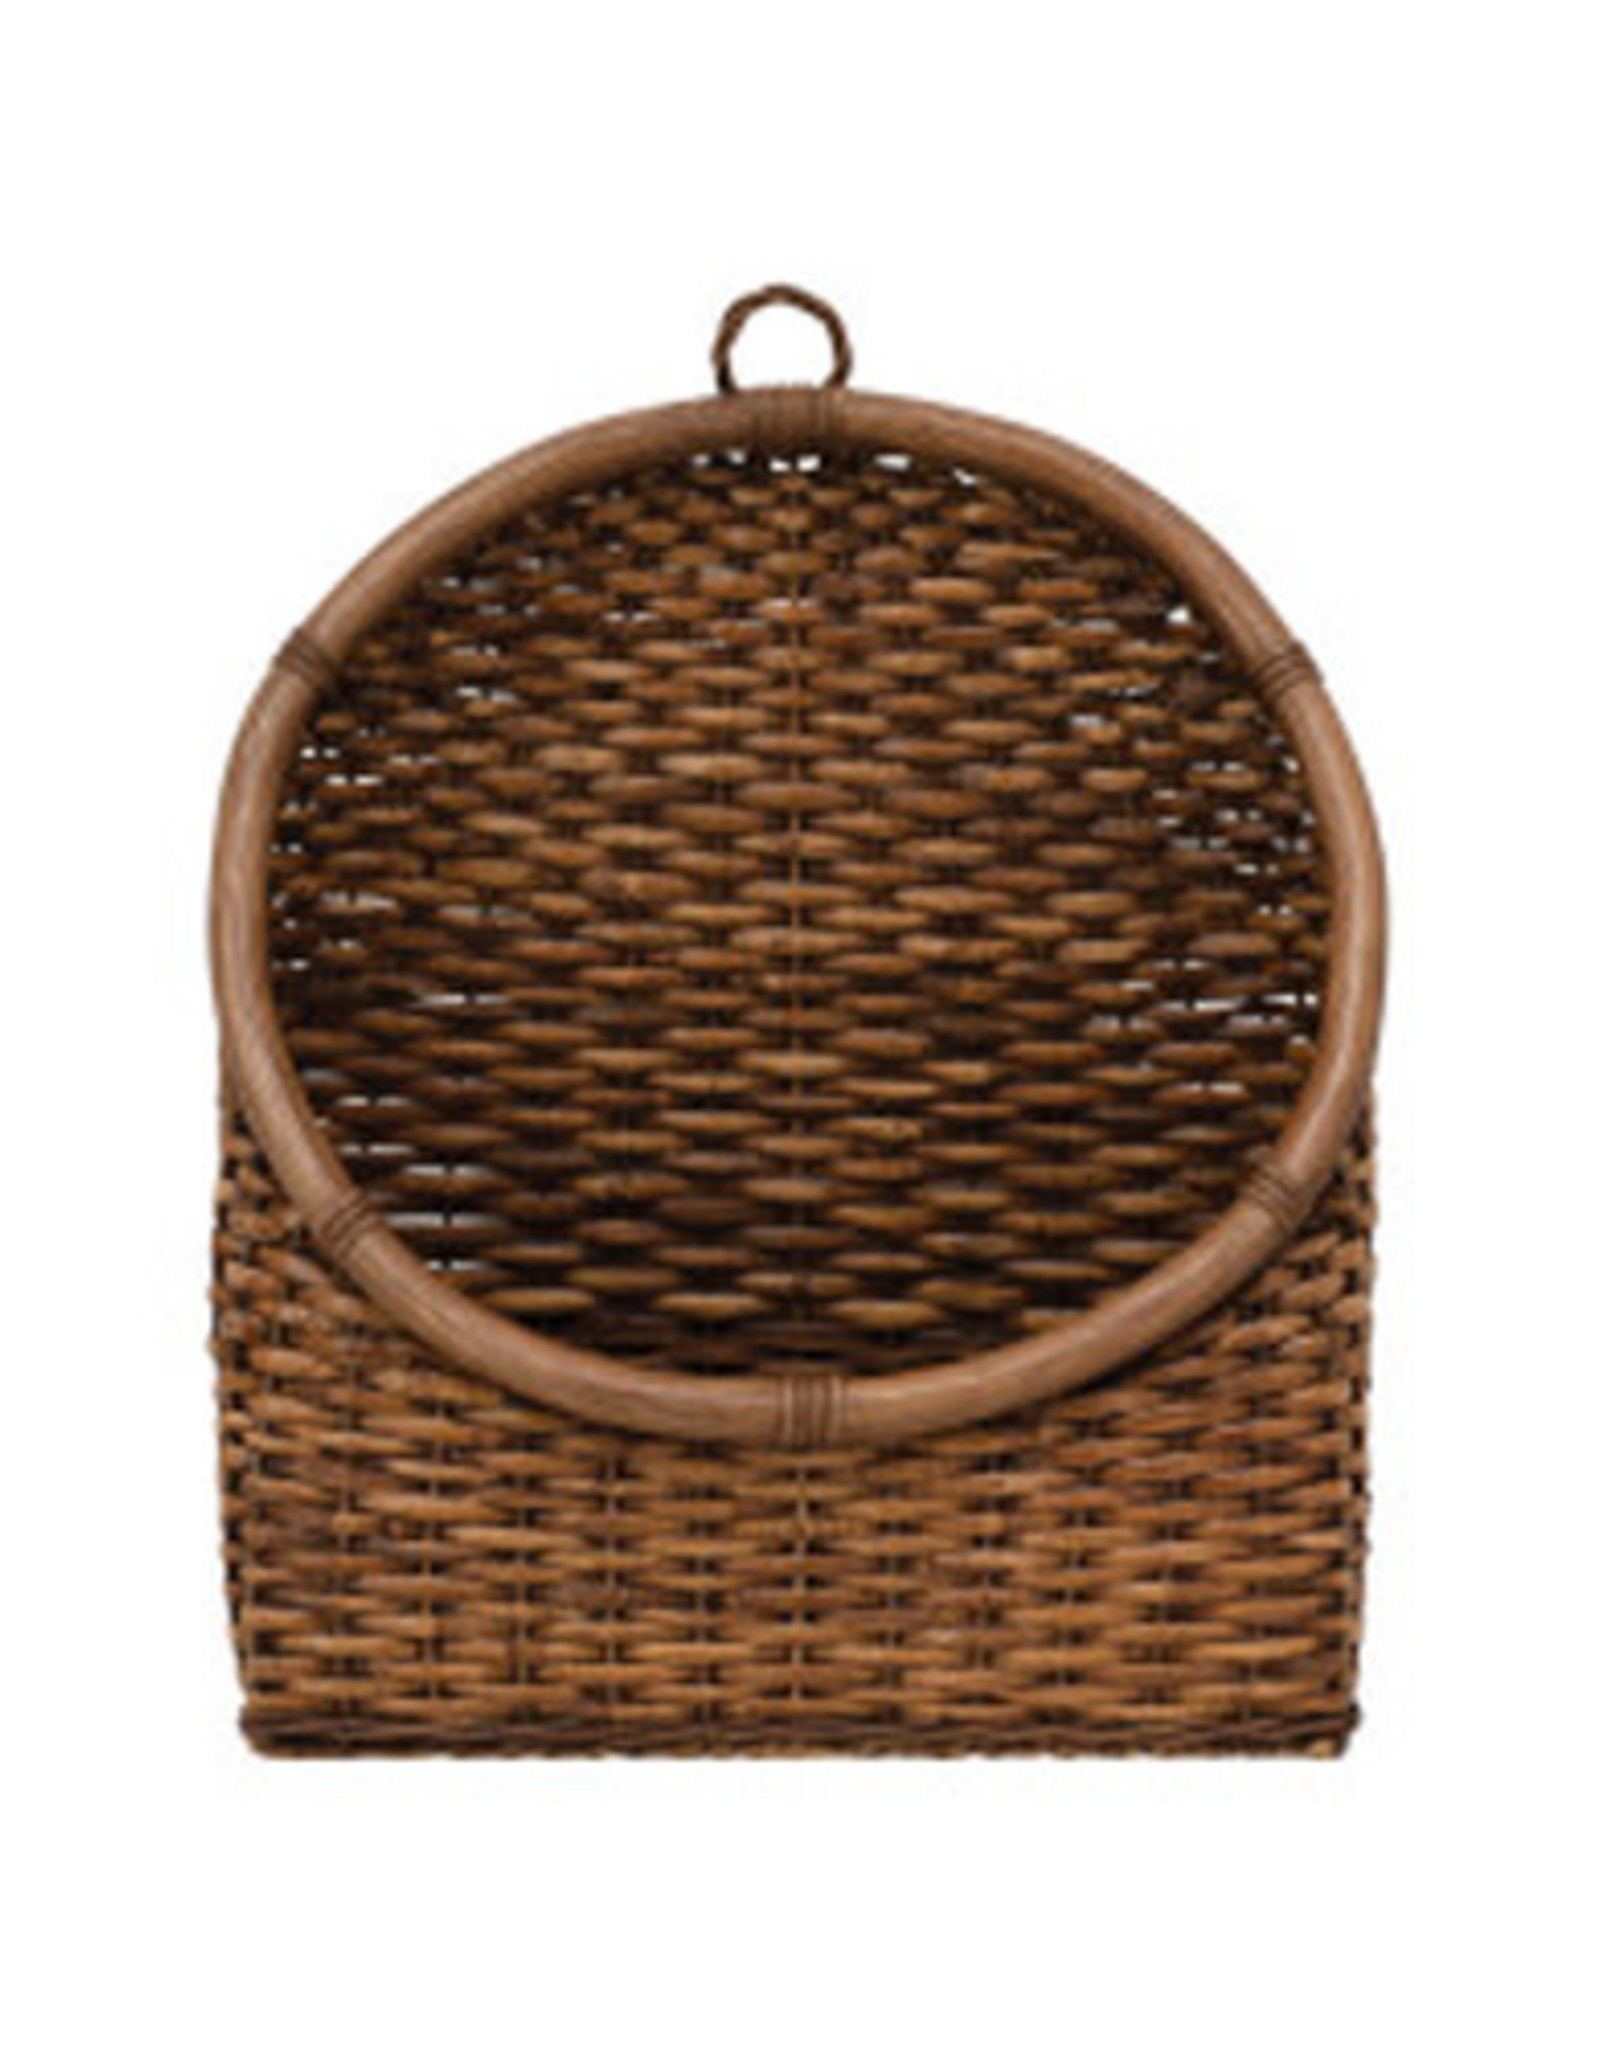 Handwoven Rattan Wall Basket